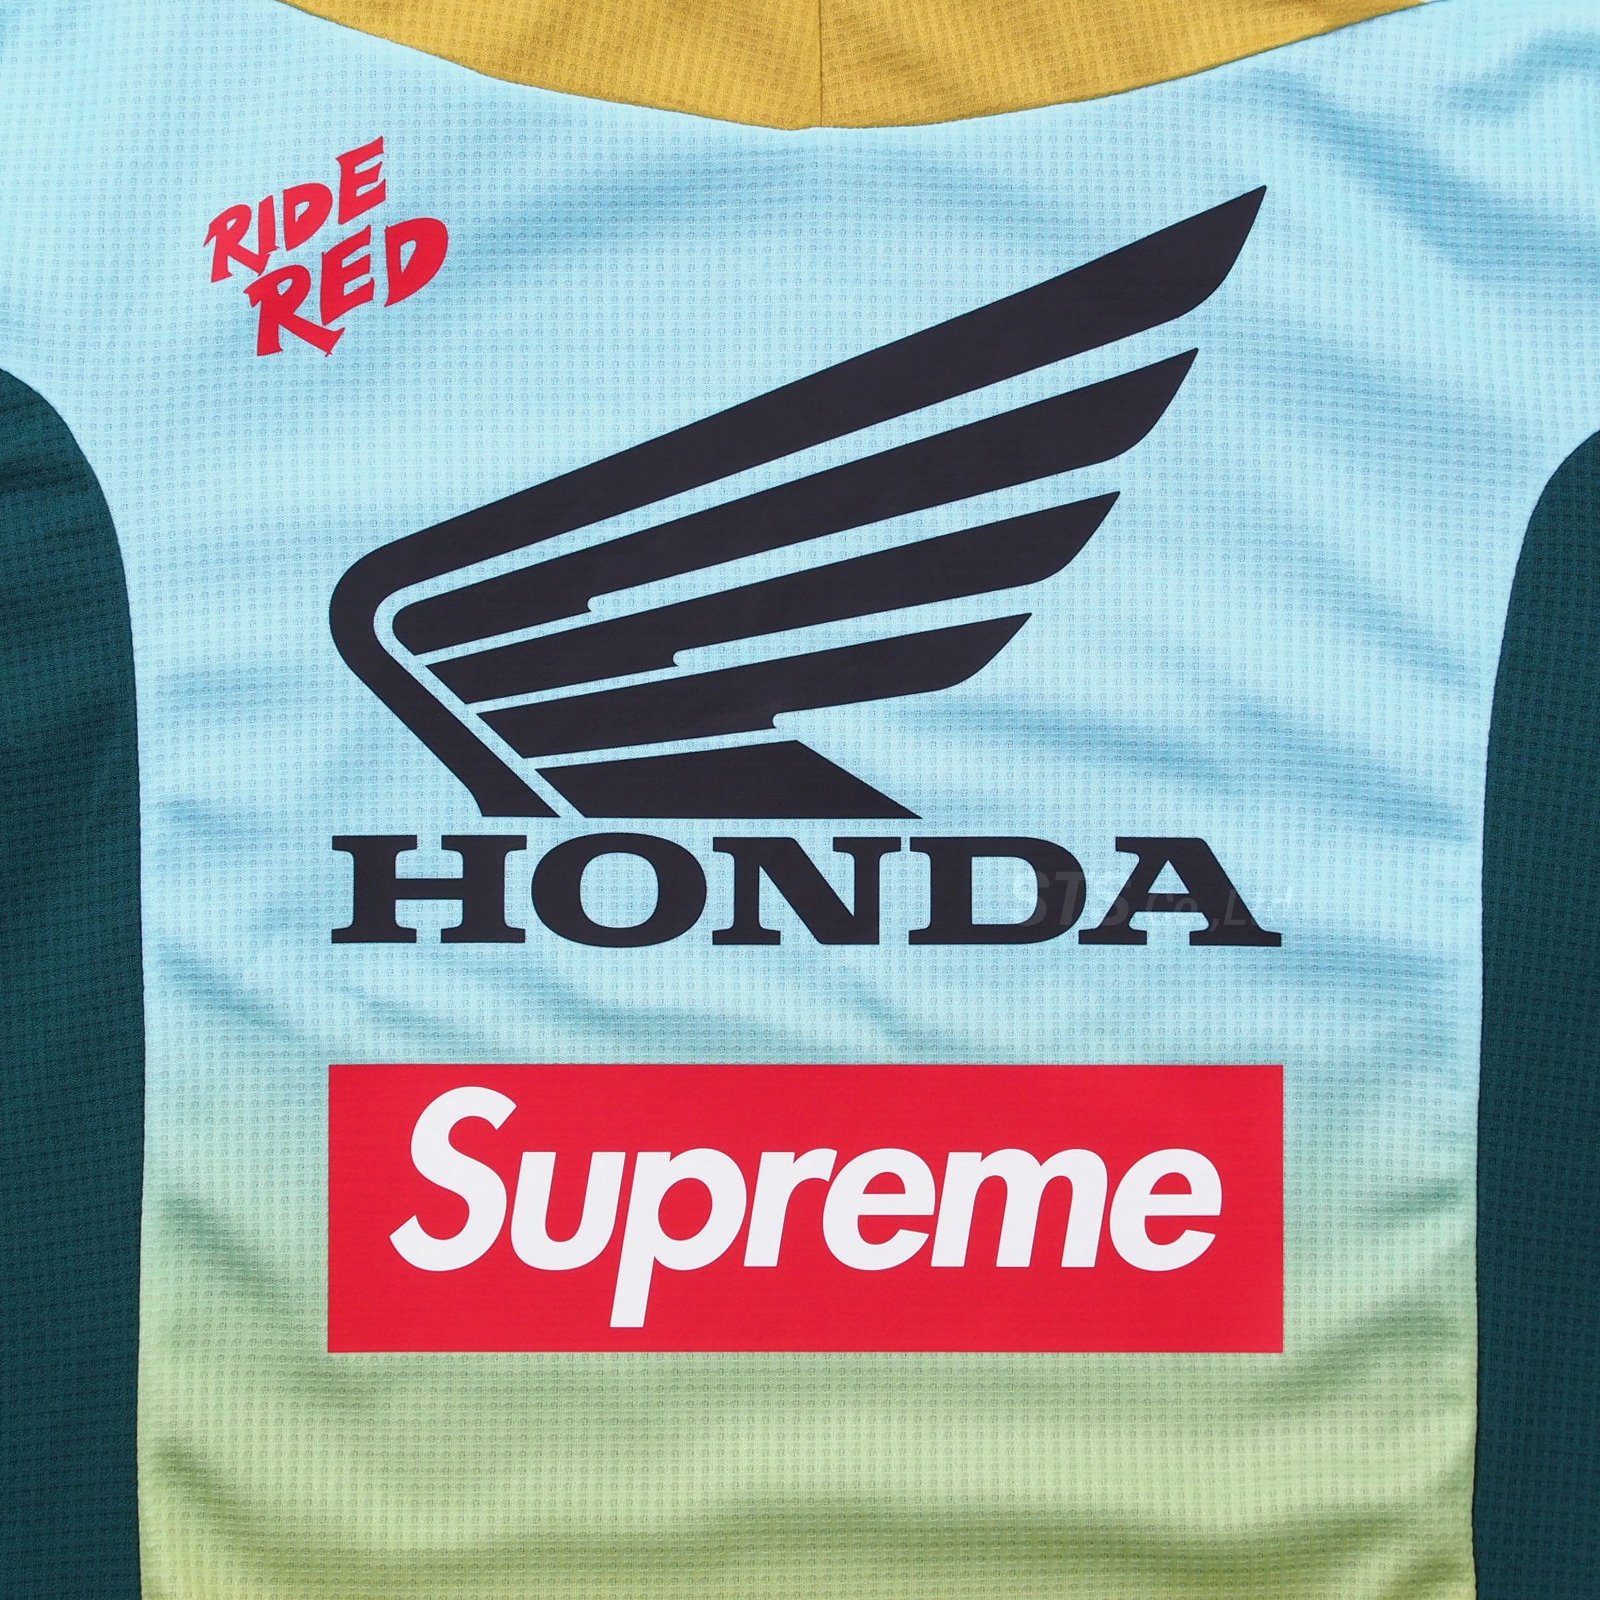 Supreme/Honda/Fox Racing Moto Jersey Top - ParkSIDER